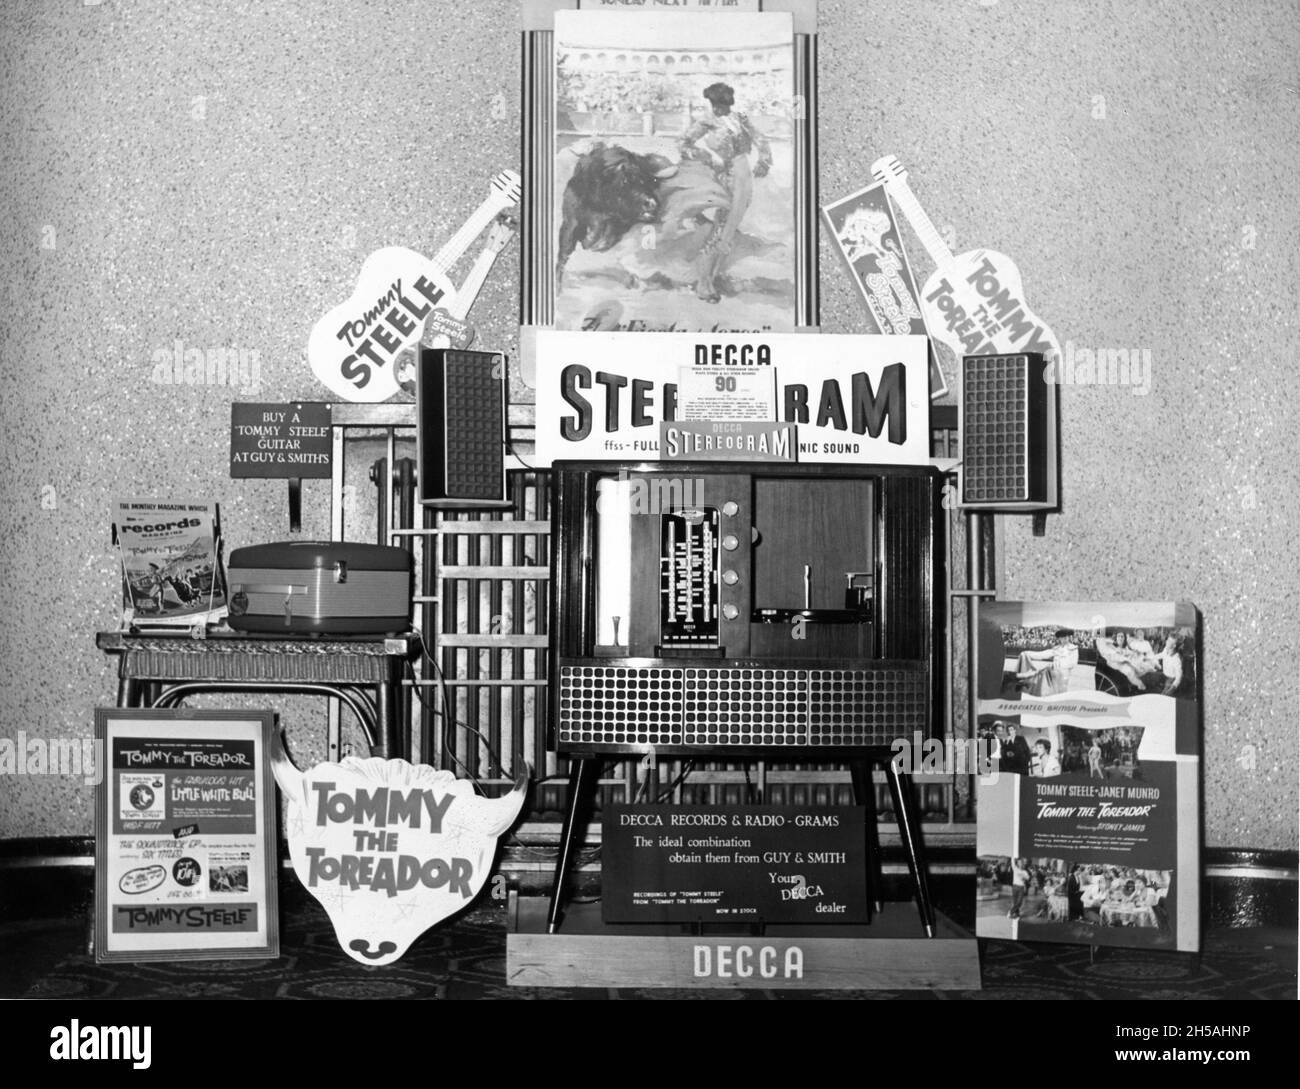 Mostra promozionale al Ritz / ABC Cinema in Cleethorpes per Decca Stereogram Record giocatori e Tommy Steele Guitars durante la mostra di TOMMY STEELE in TOMMY il TOREADOR 1959 direttore JOHN PADDY CARSTAIRS George H. Brown Productions / Warner-Pathe Distributori Foto Stock